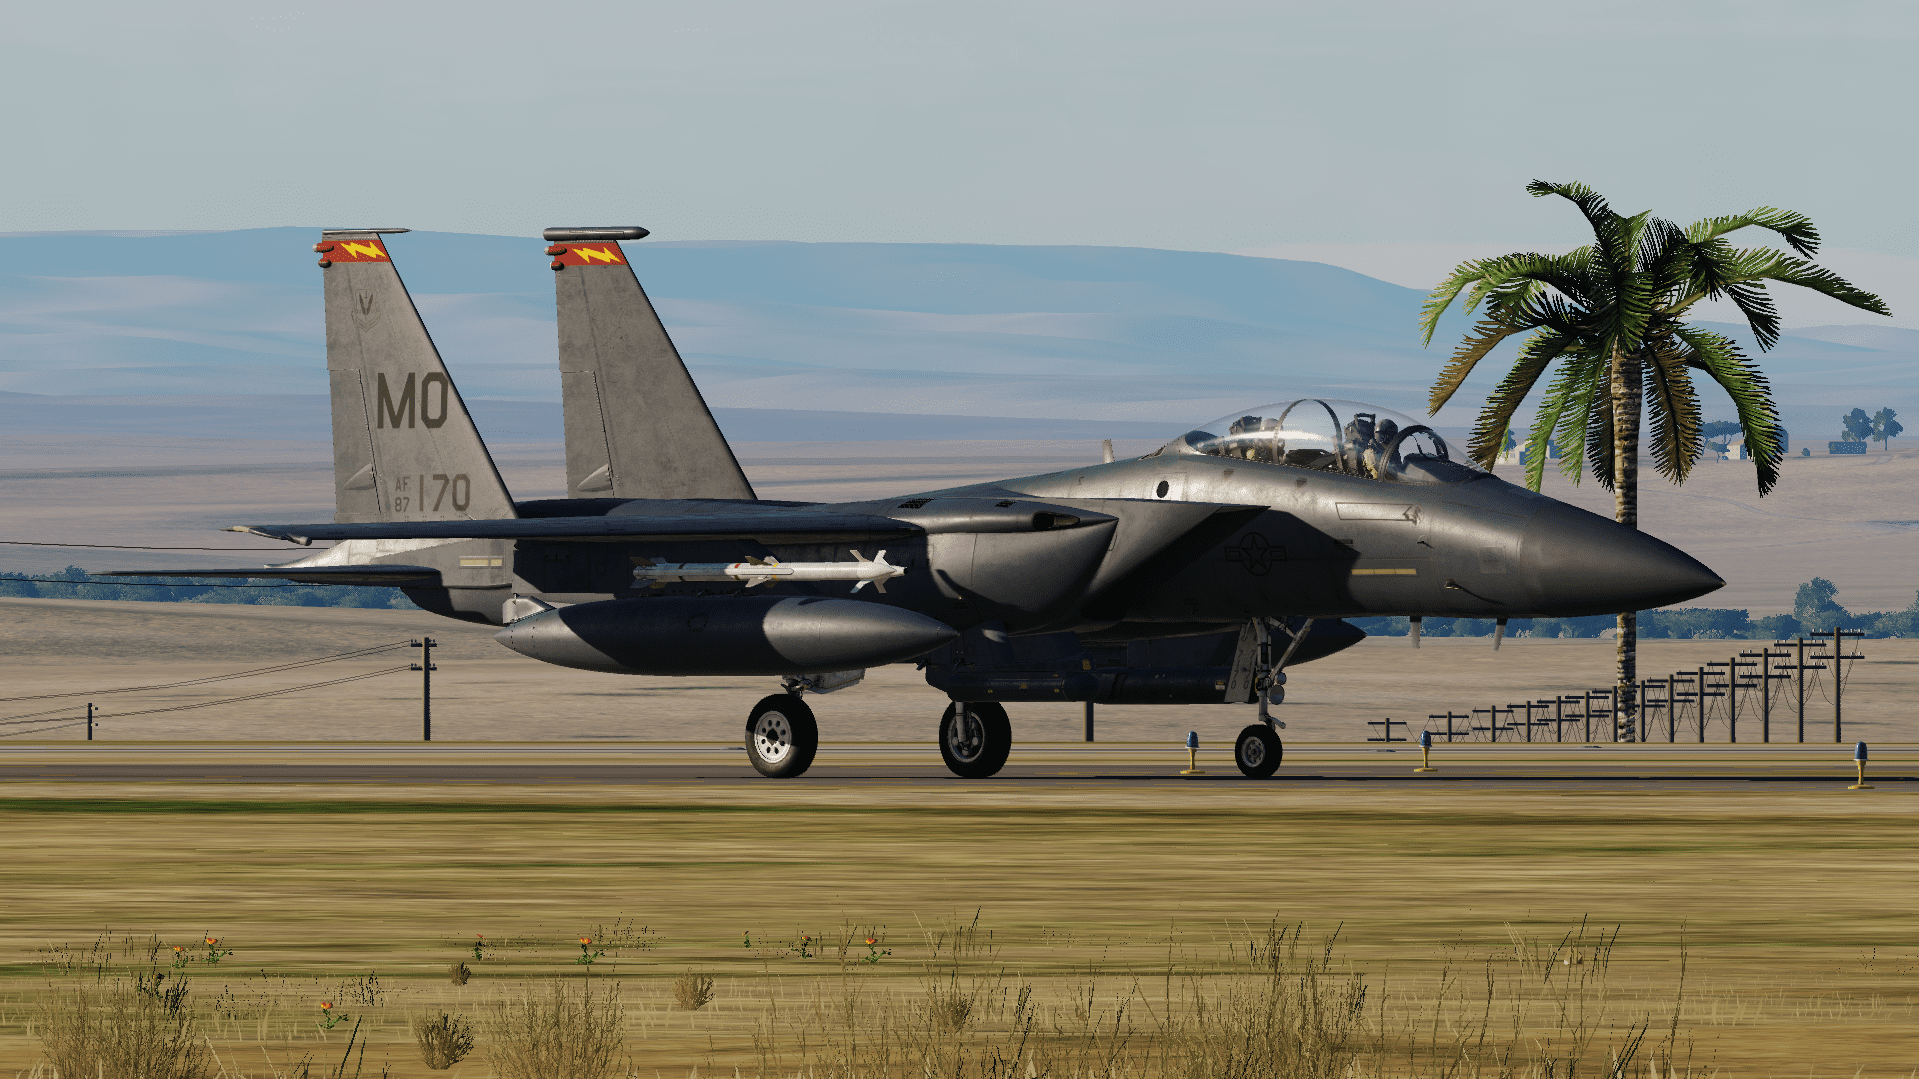 F-15E Strike eagle MO 87-170 "Boogeyman"